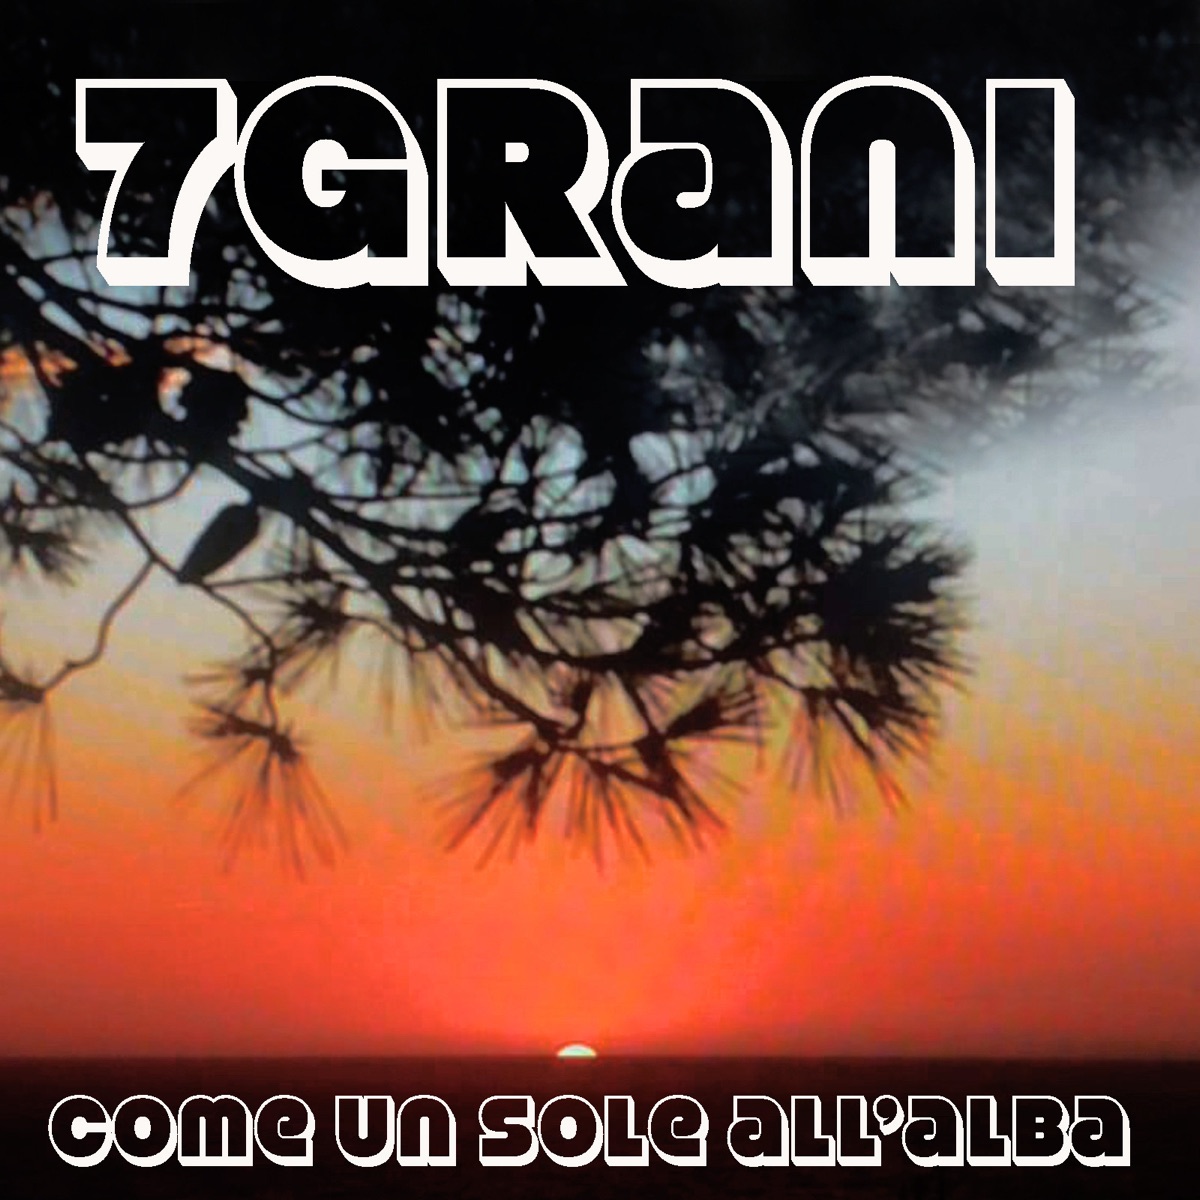 come un sole all'alba - Single (feat. Raffaele Kohler) - Single - Album by  7grani - Apple Music